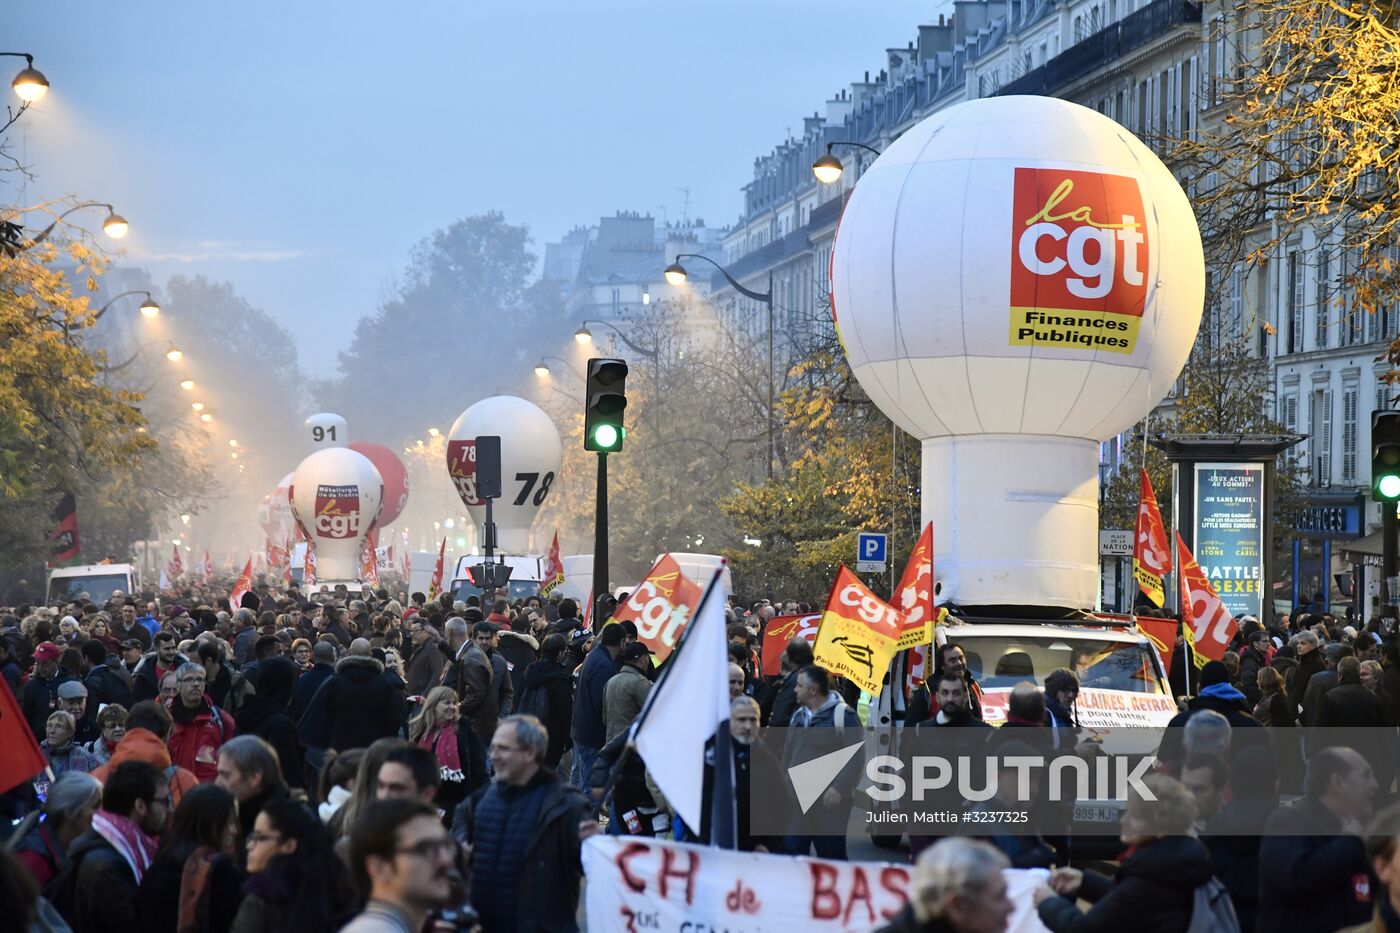 Rally in Paris against Macron's policies